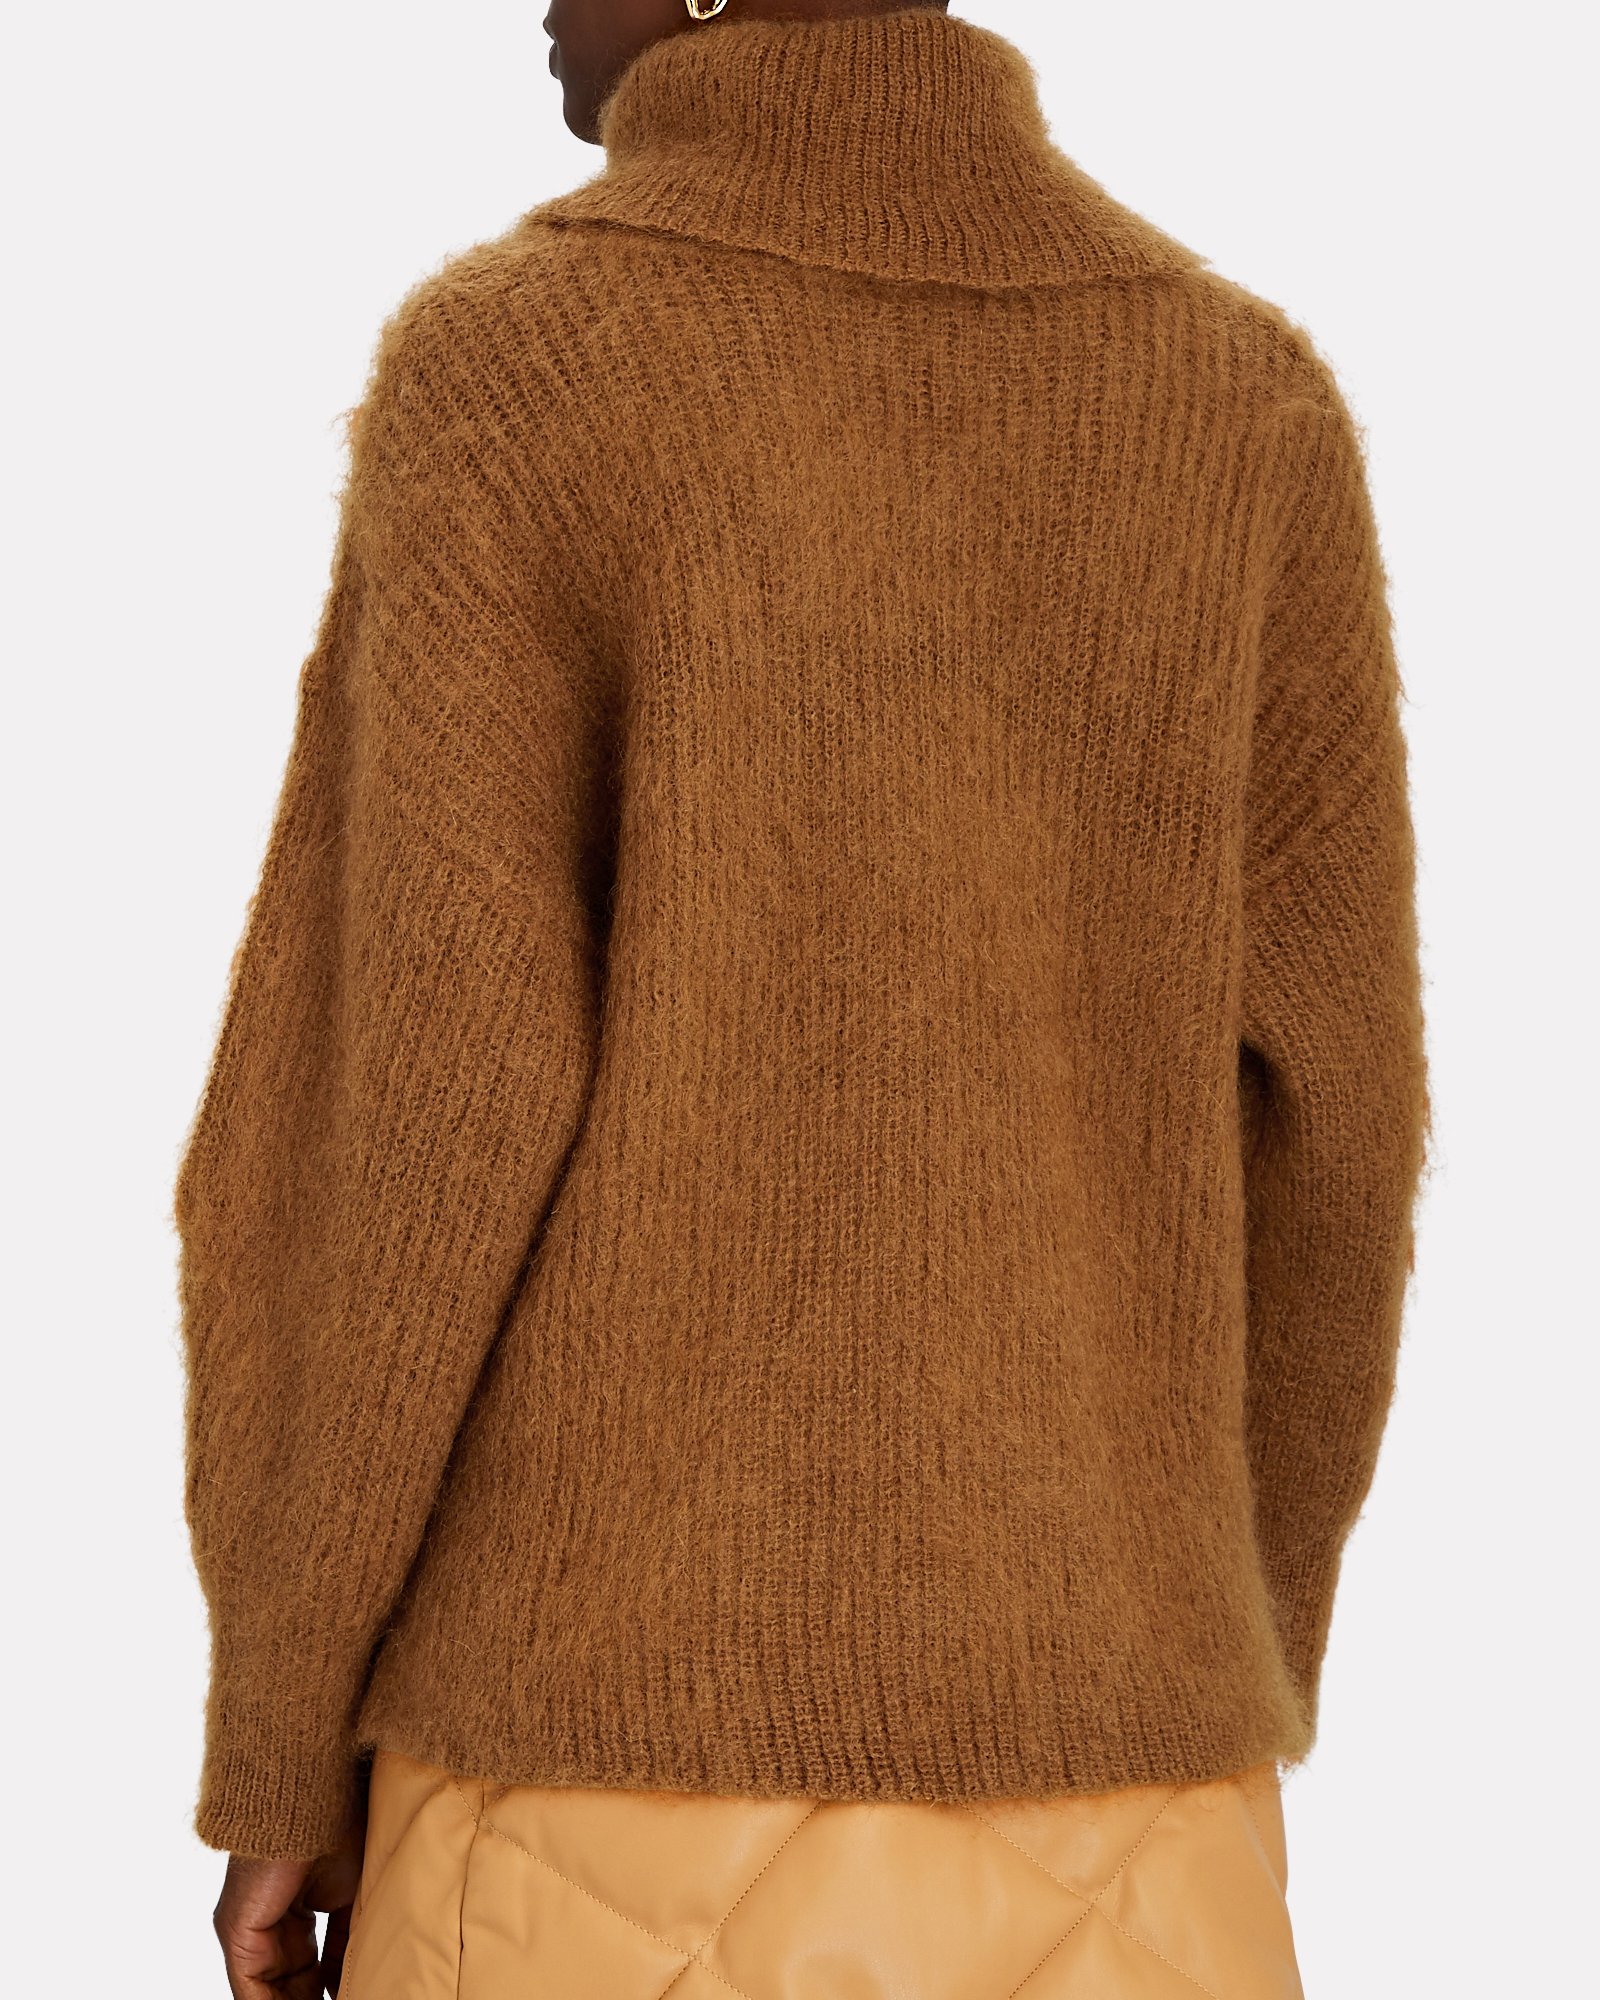 Alberta Ferretti Mohair-Blend Turtleneck Sweater | INTERMIX®